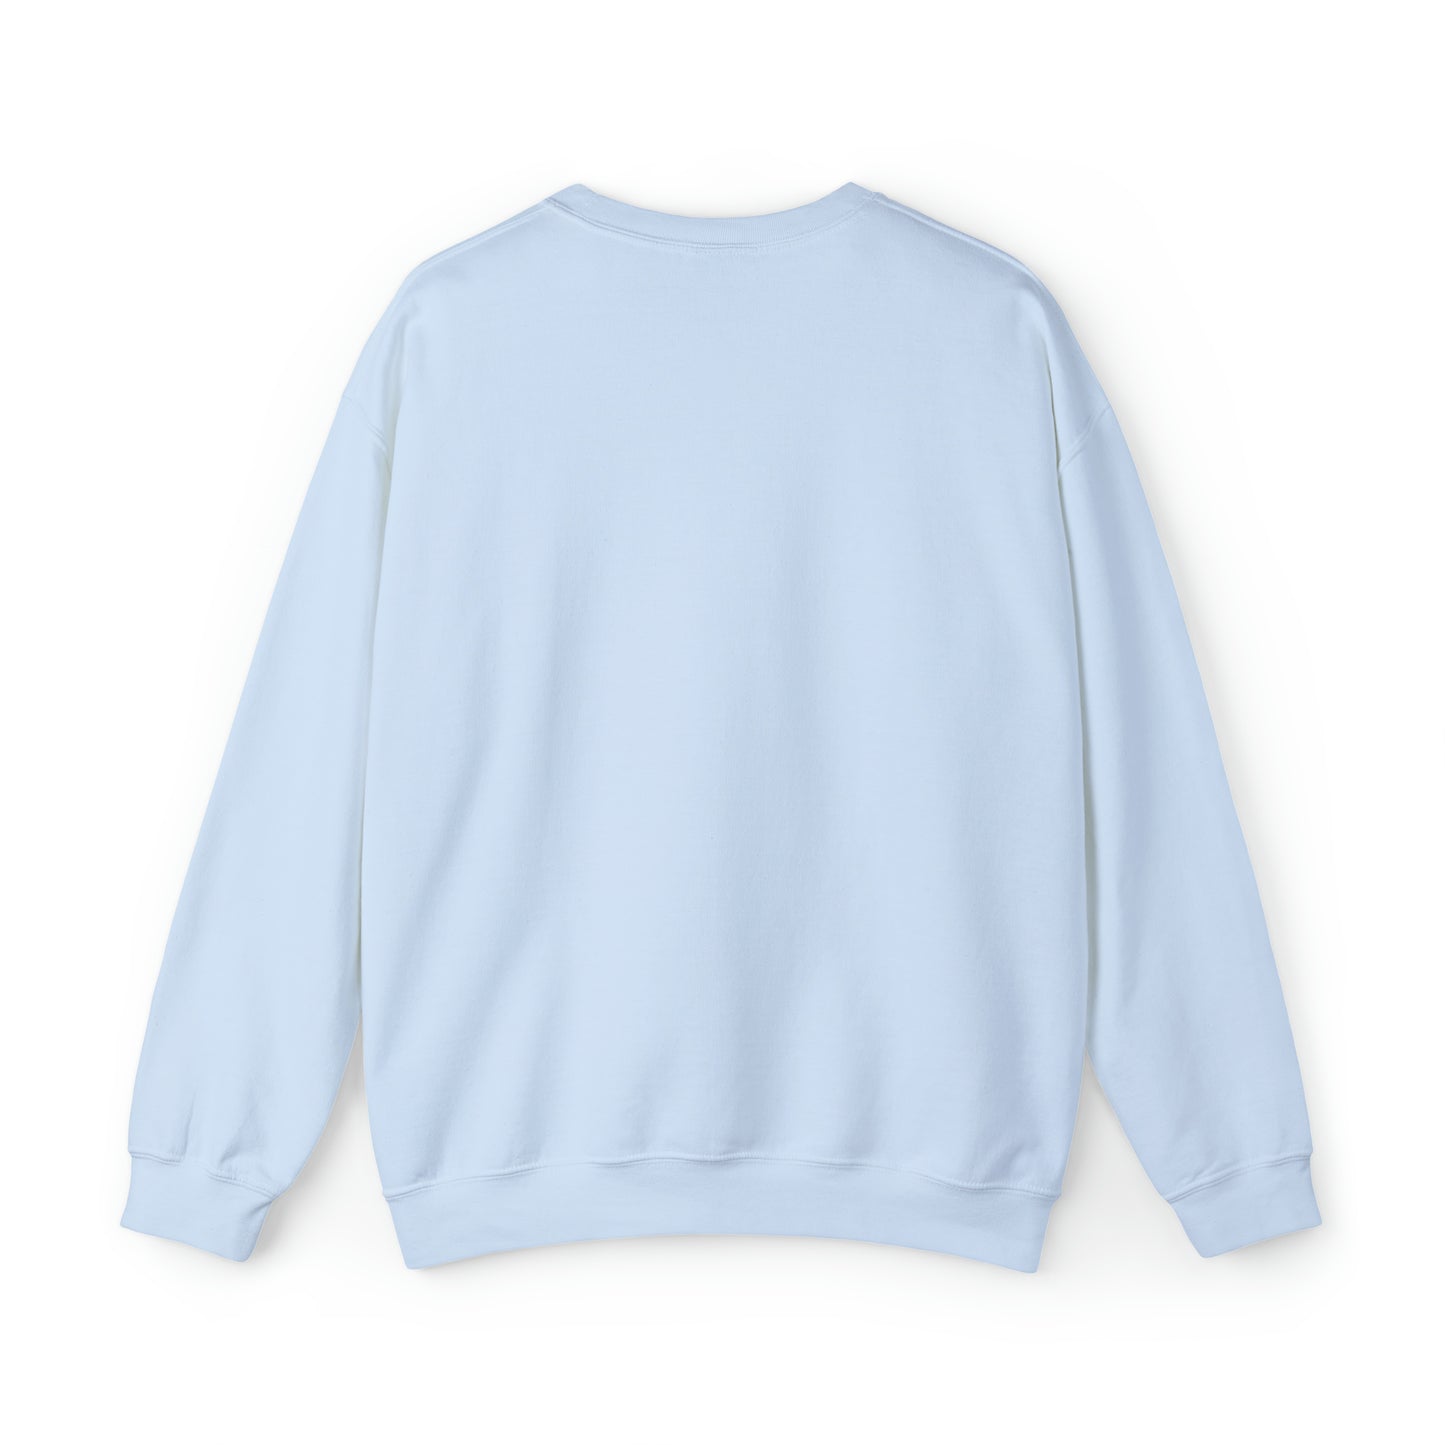 Grandparent Appreciation day Unisex Heavy Blend™ Crewneck Sweatshirt